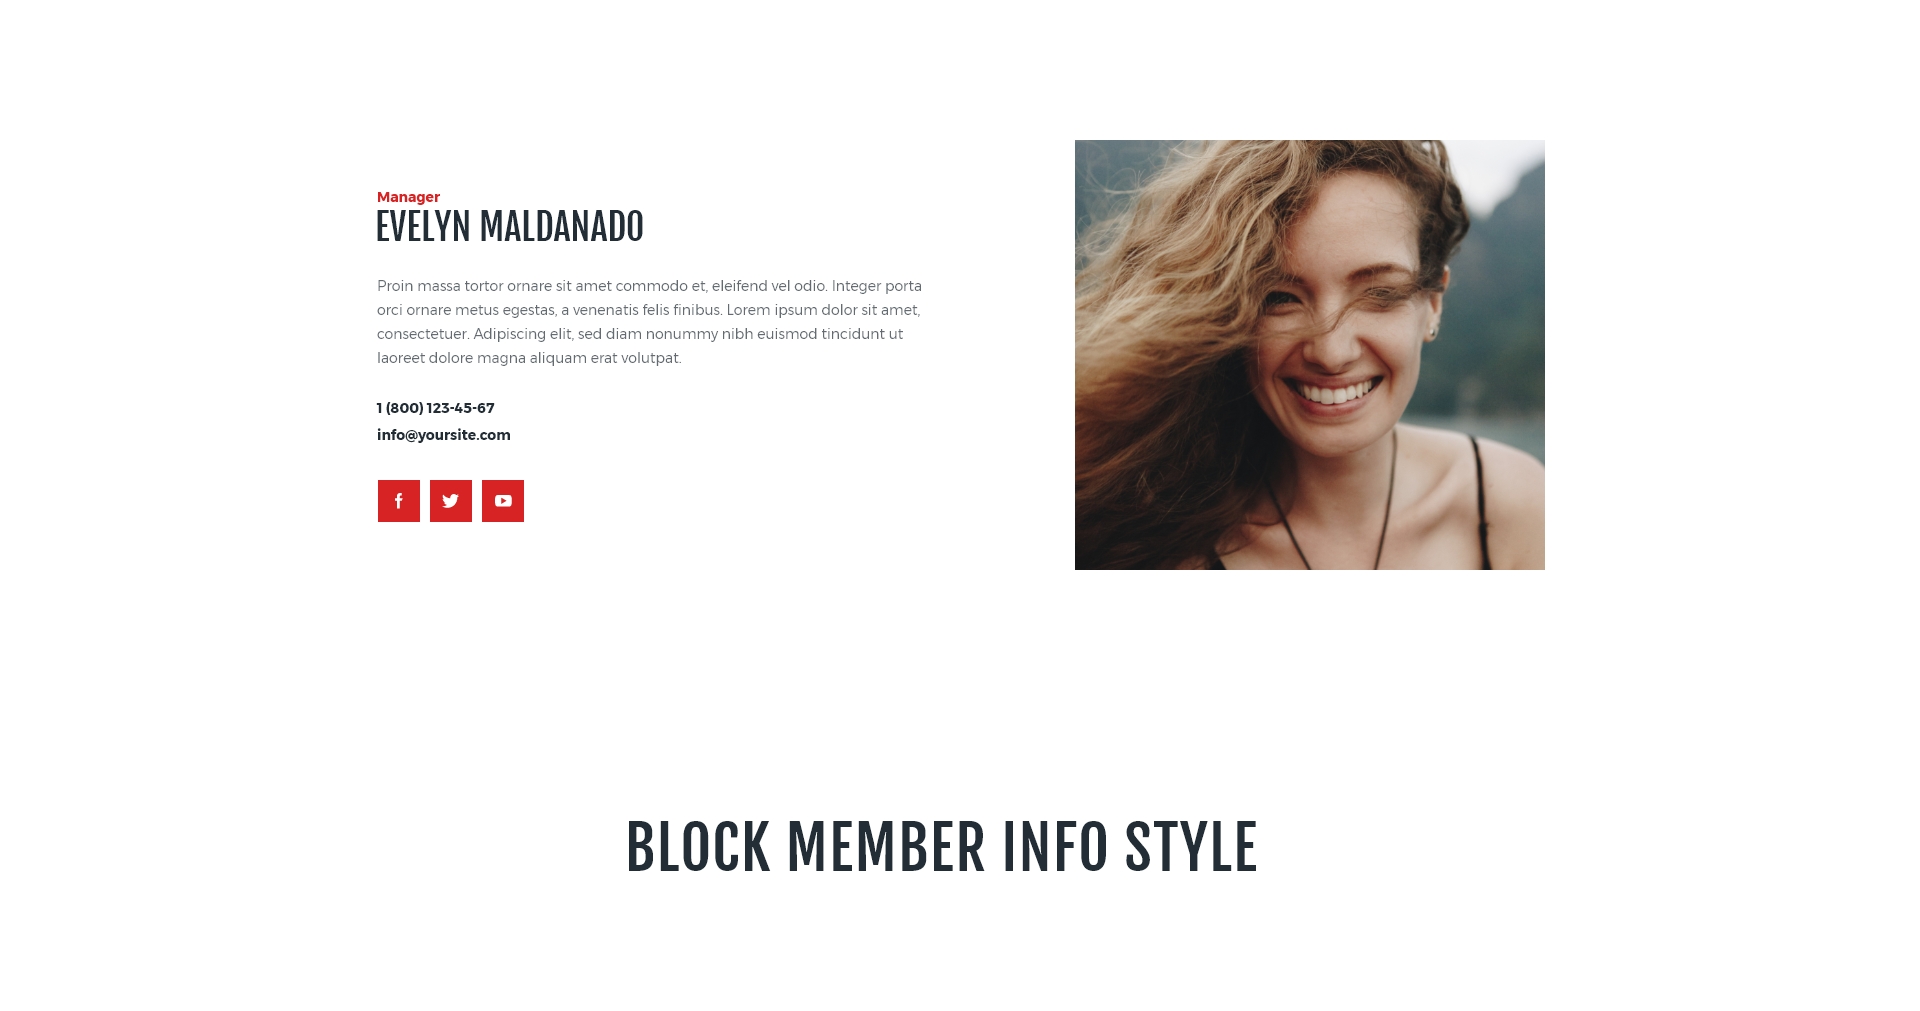 Block member info style